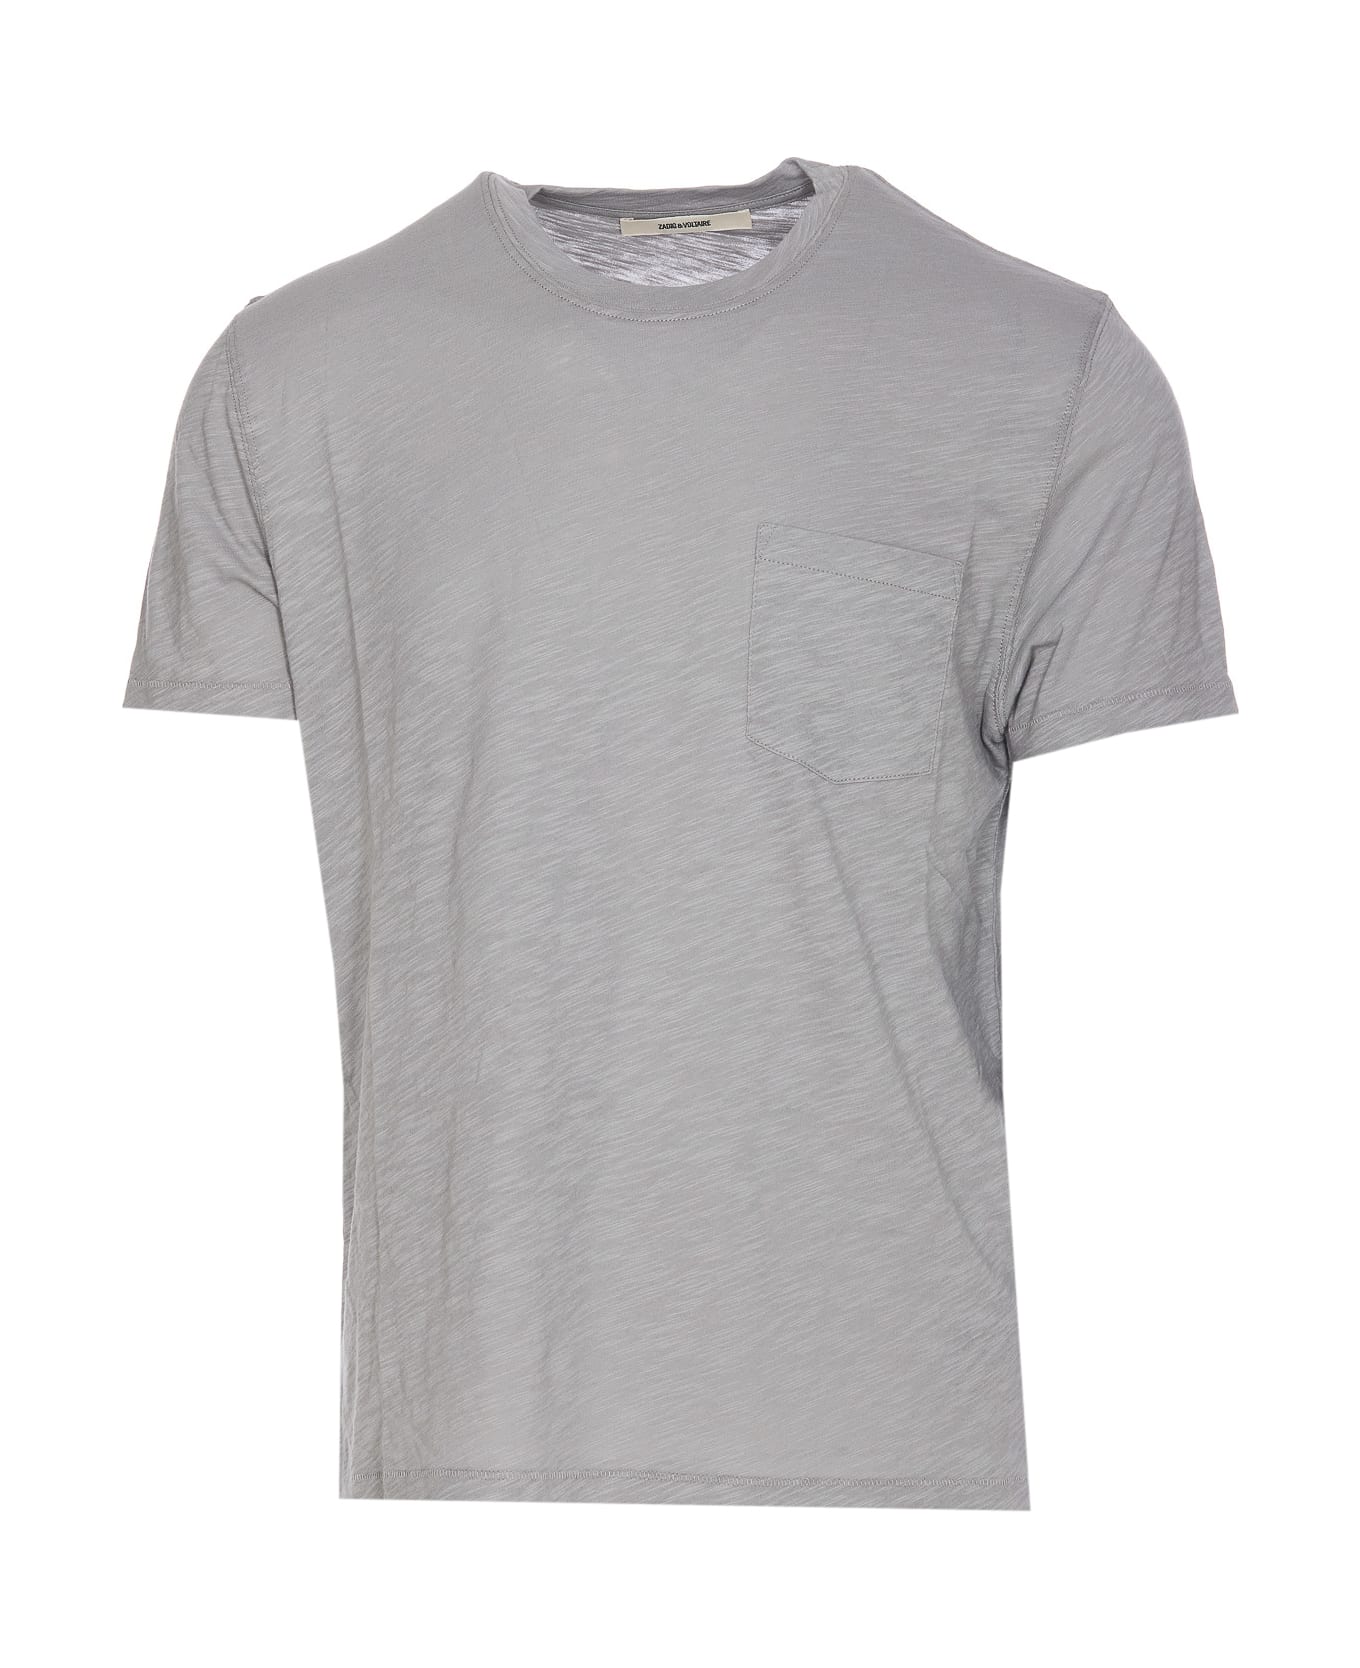 Zadig & Voltaire Stockholm Flamme T-shirt - Grey